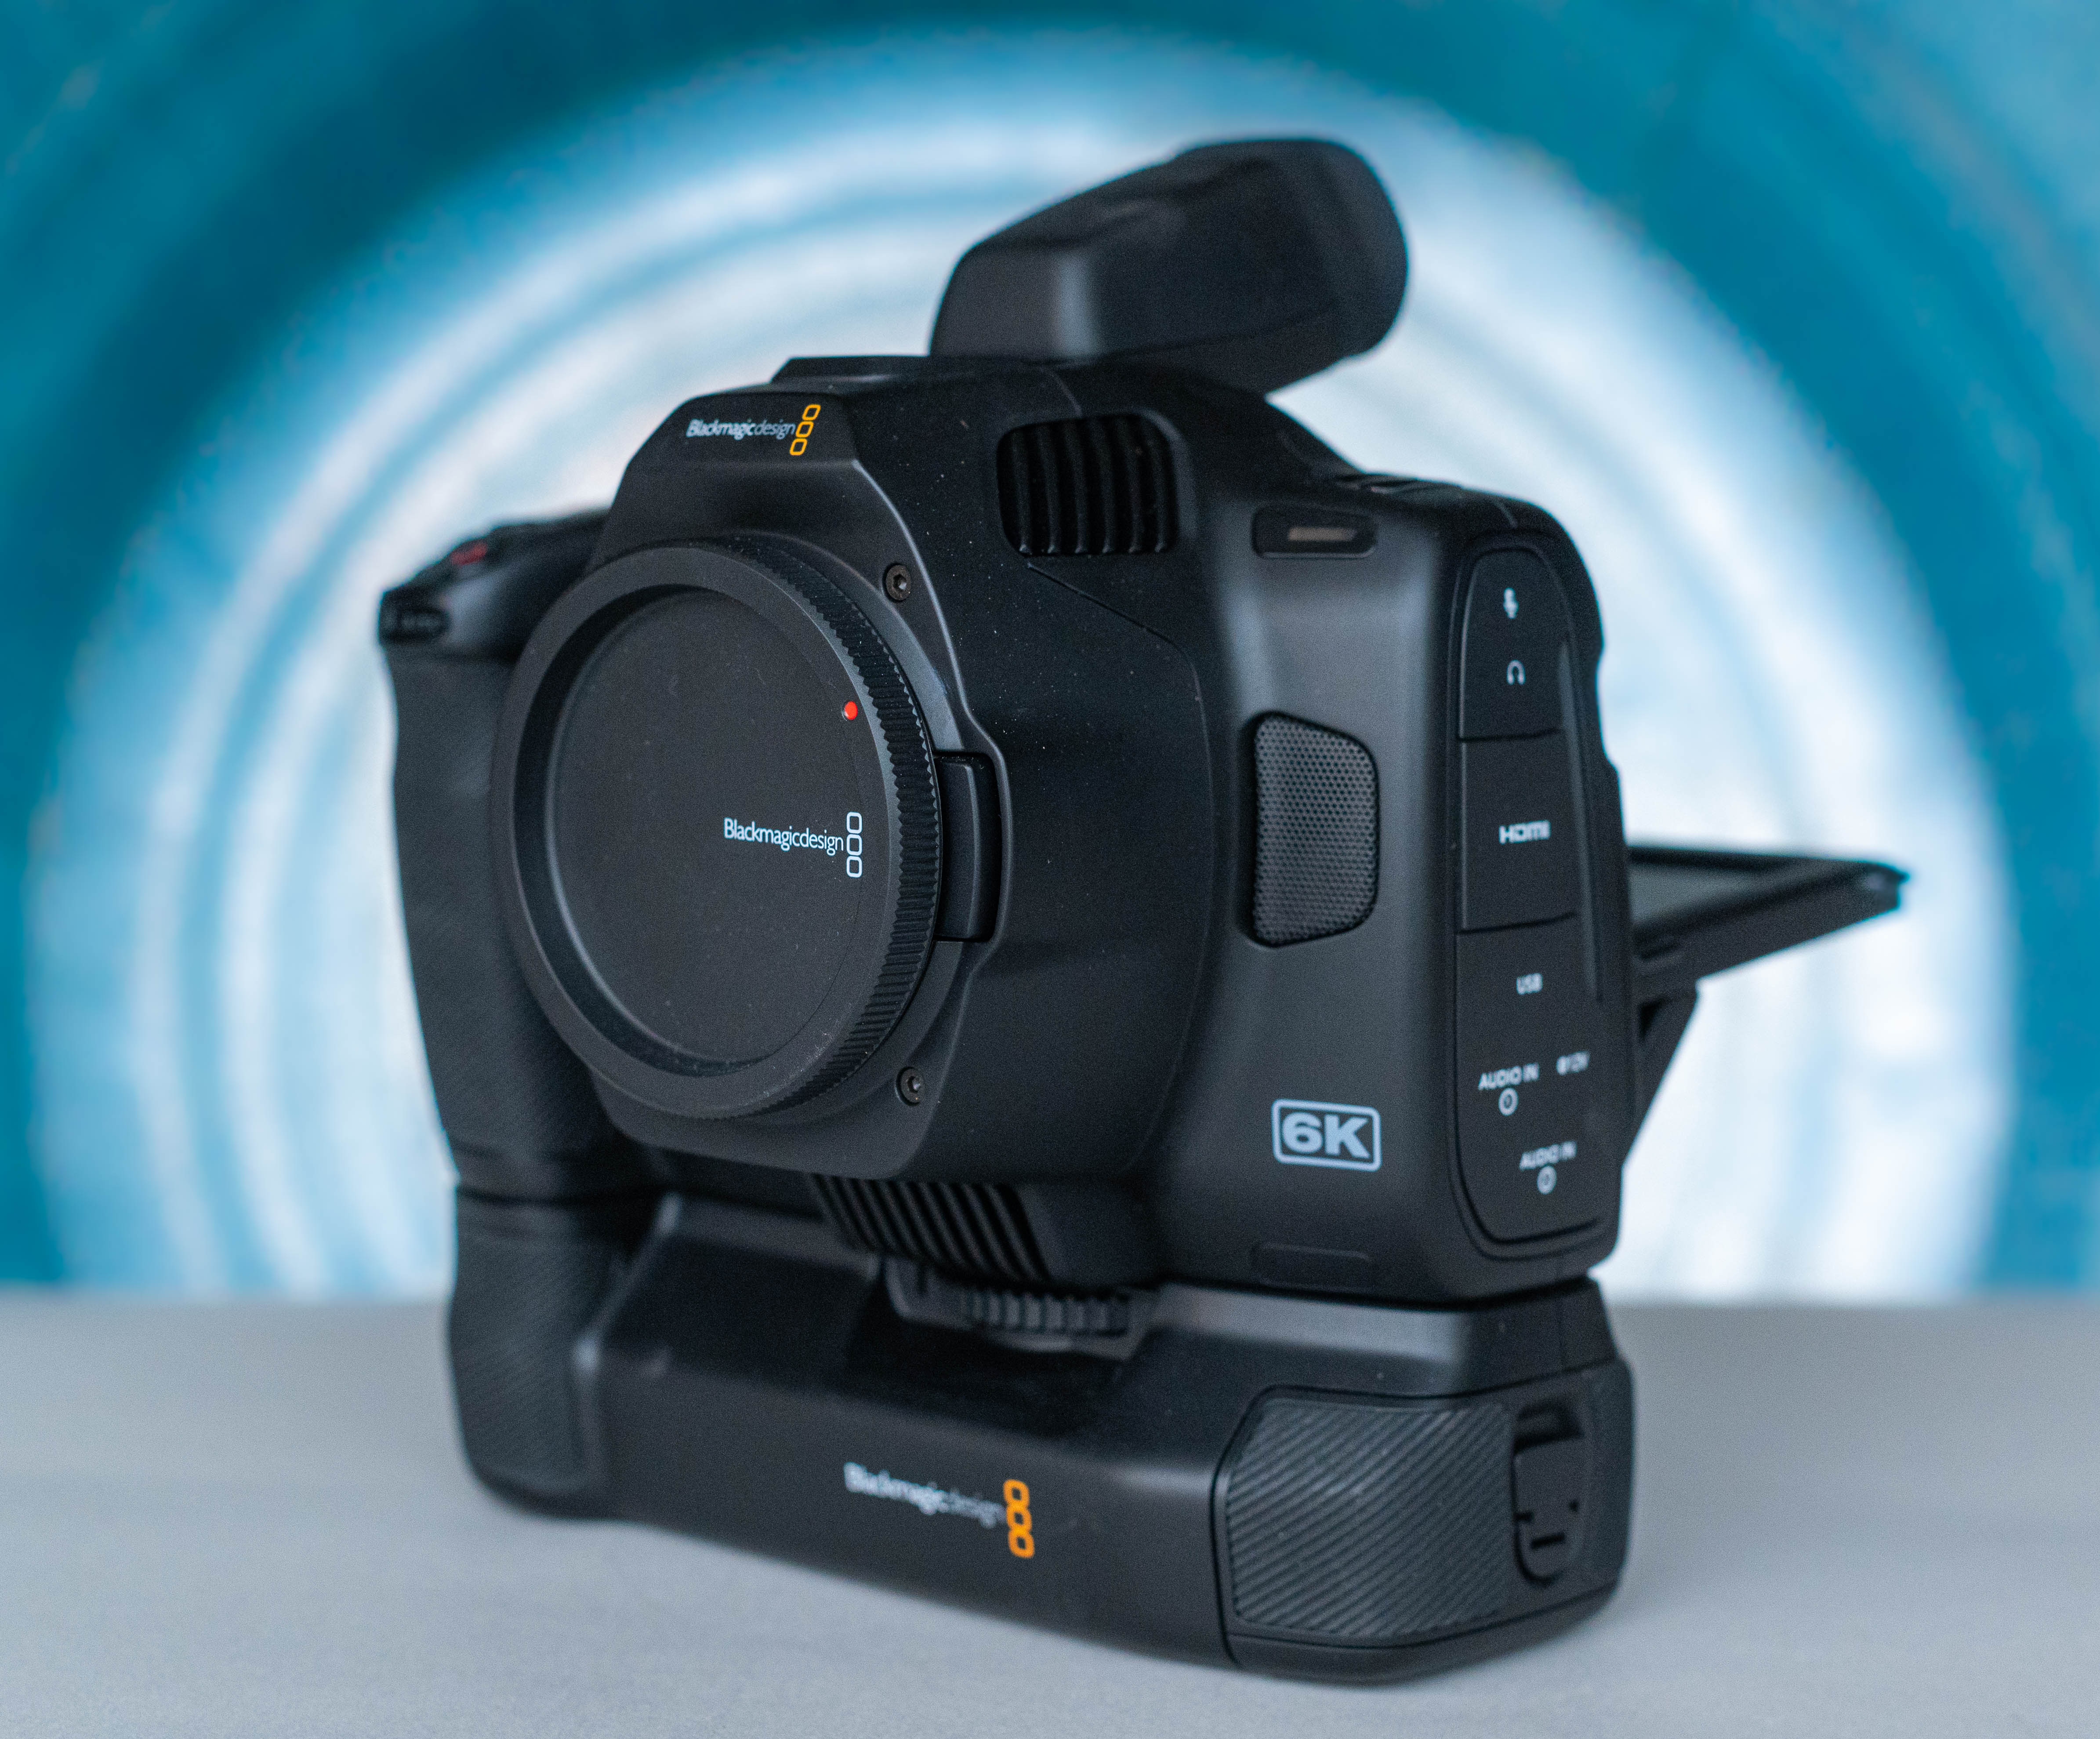 Reviewing the New Blackmagic Pocket Cinema Camera 6K Pro LaptrinhX / News